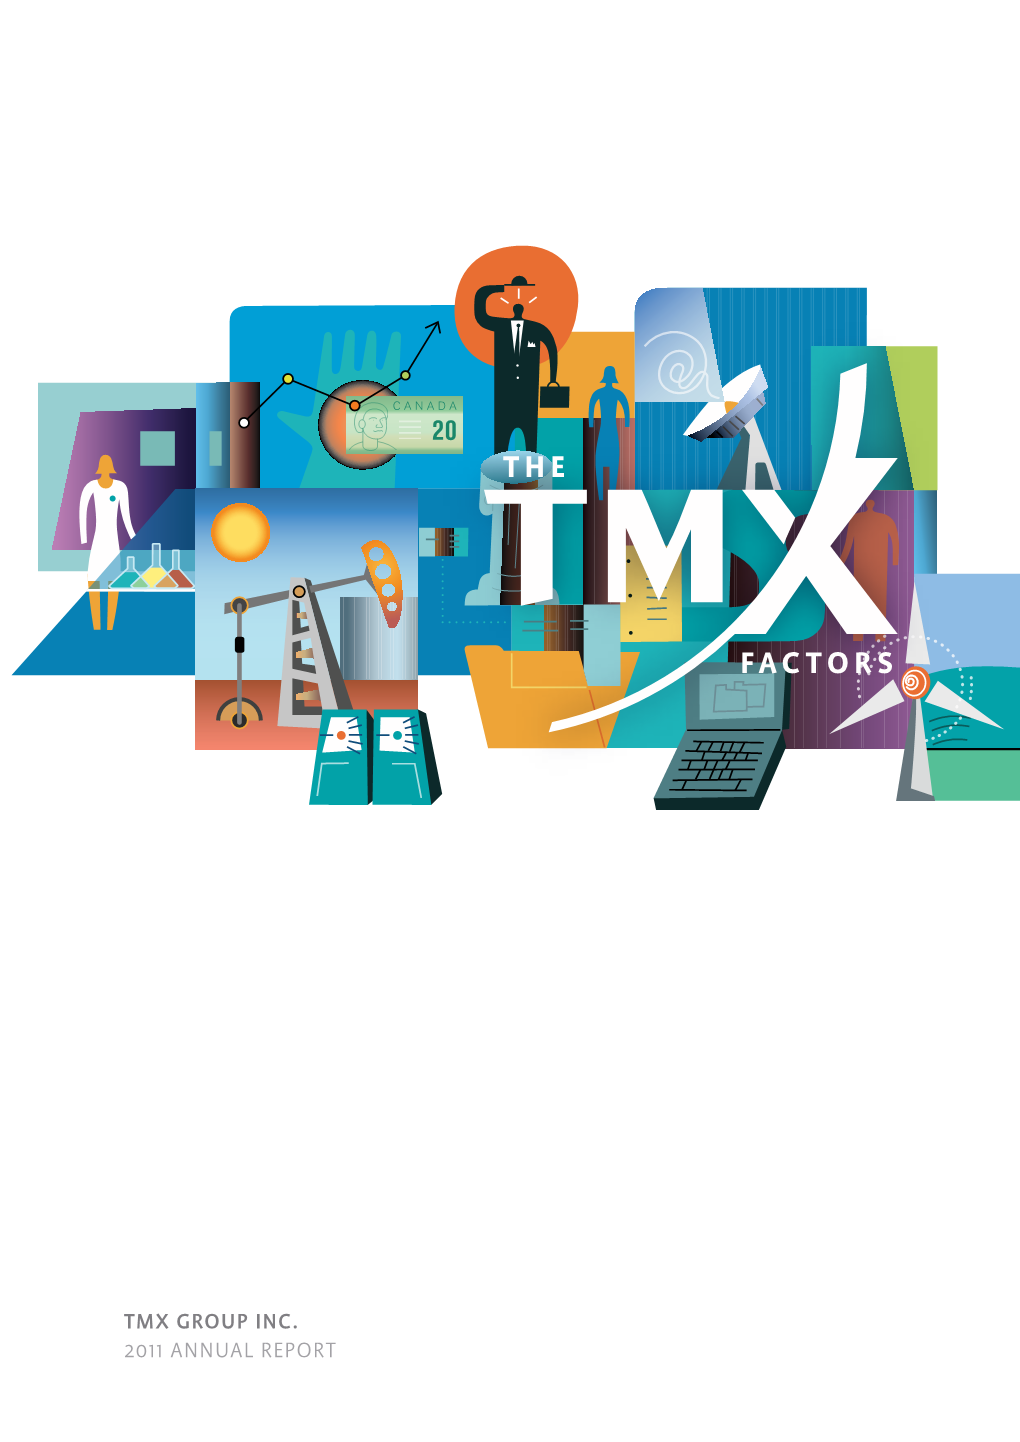 TMX GROUP INC. 2011 Annual Report the TMX Factors Four Key Factors Contribute to TMX Group’S Success